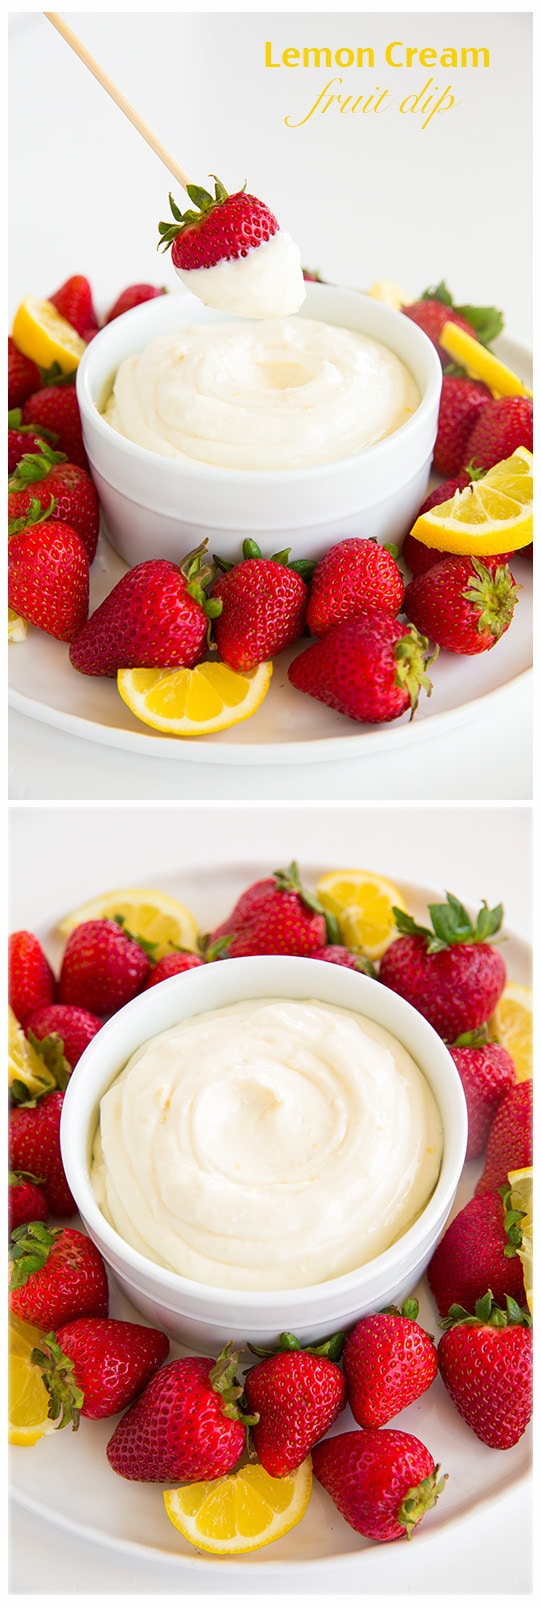 Lemon Cream Fruit Dip - sooo good and so easy to make!